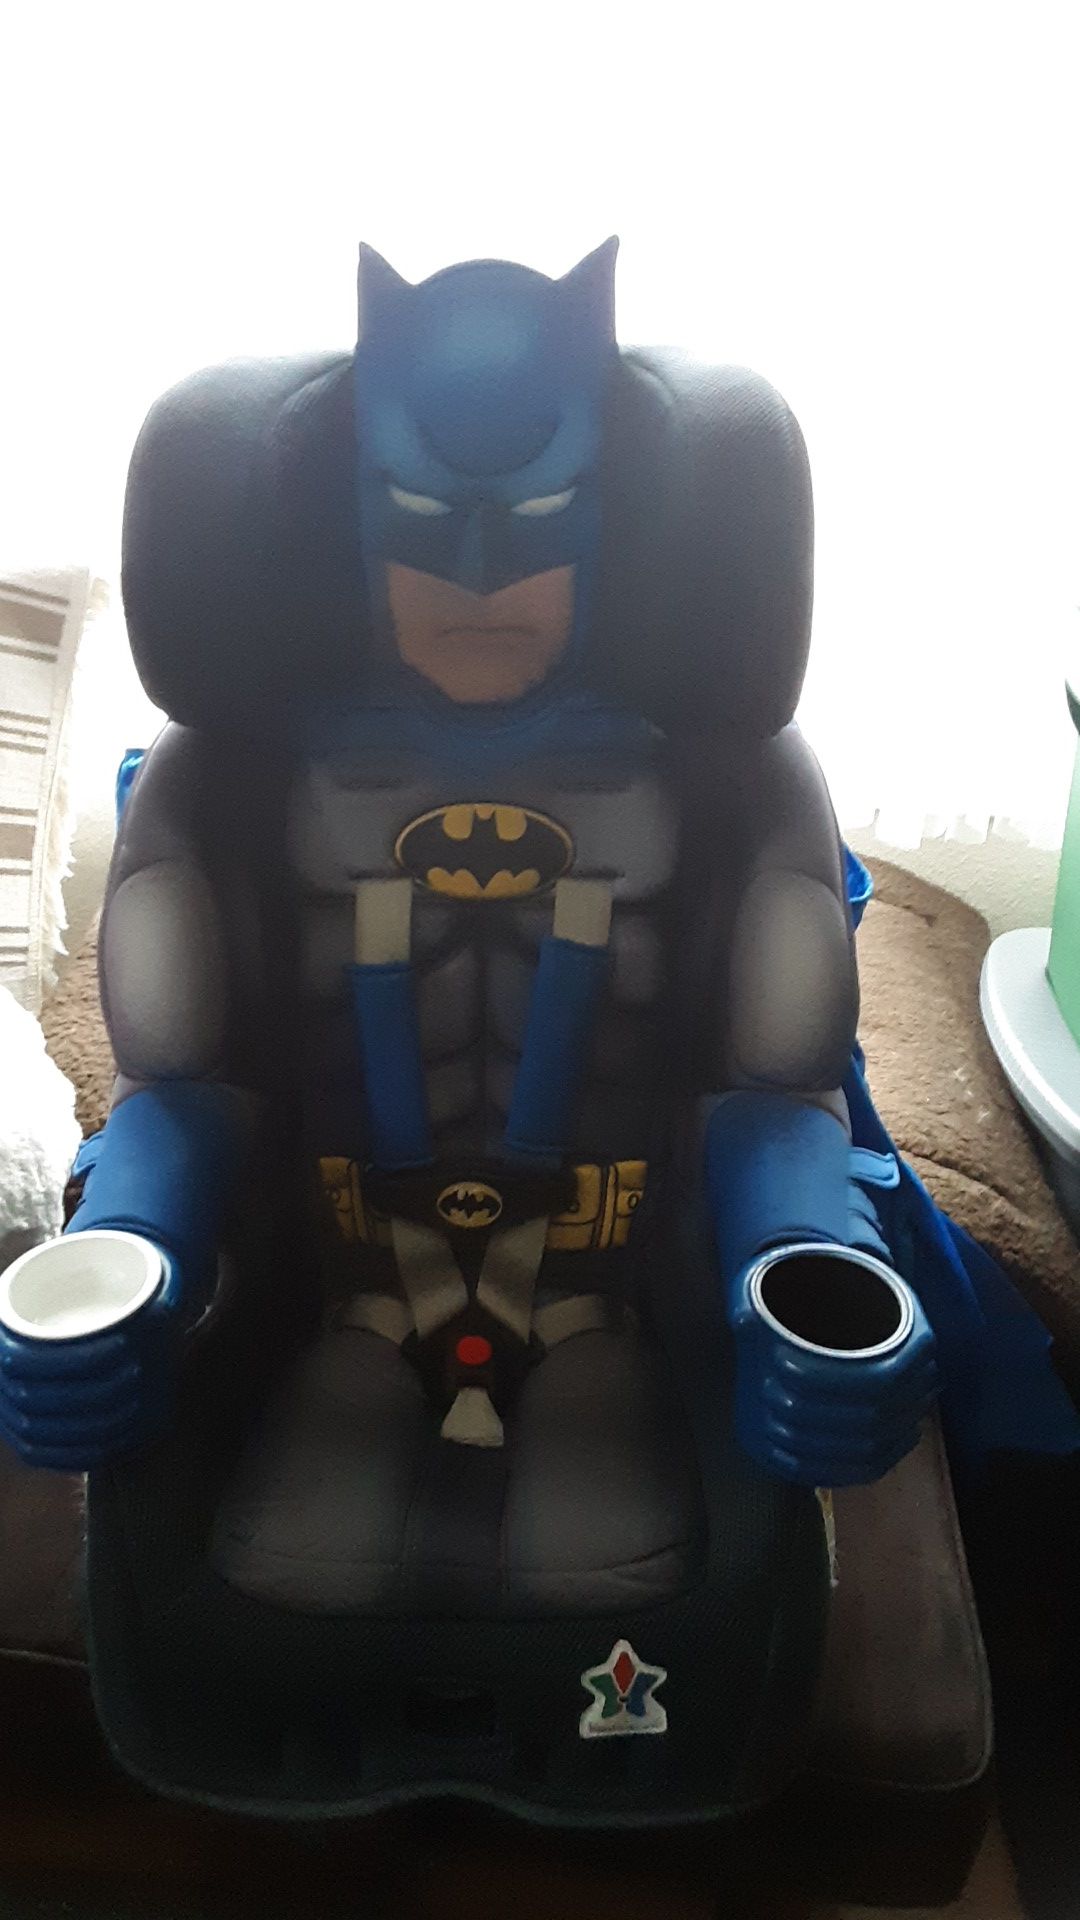 Batman car seat